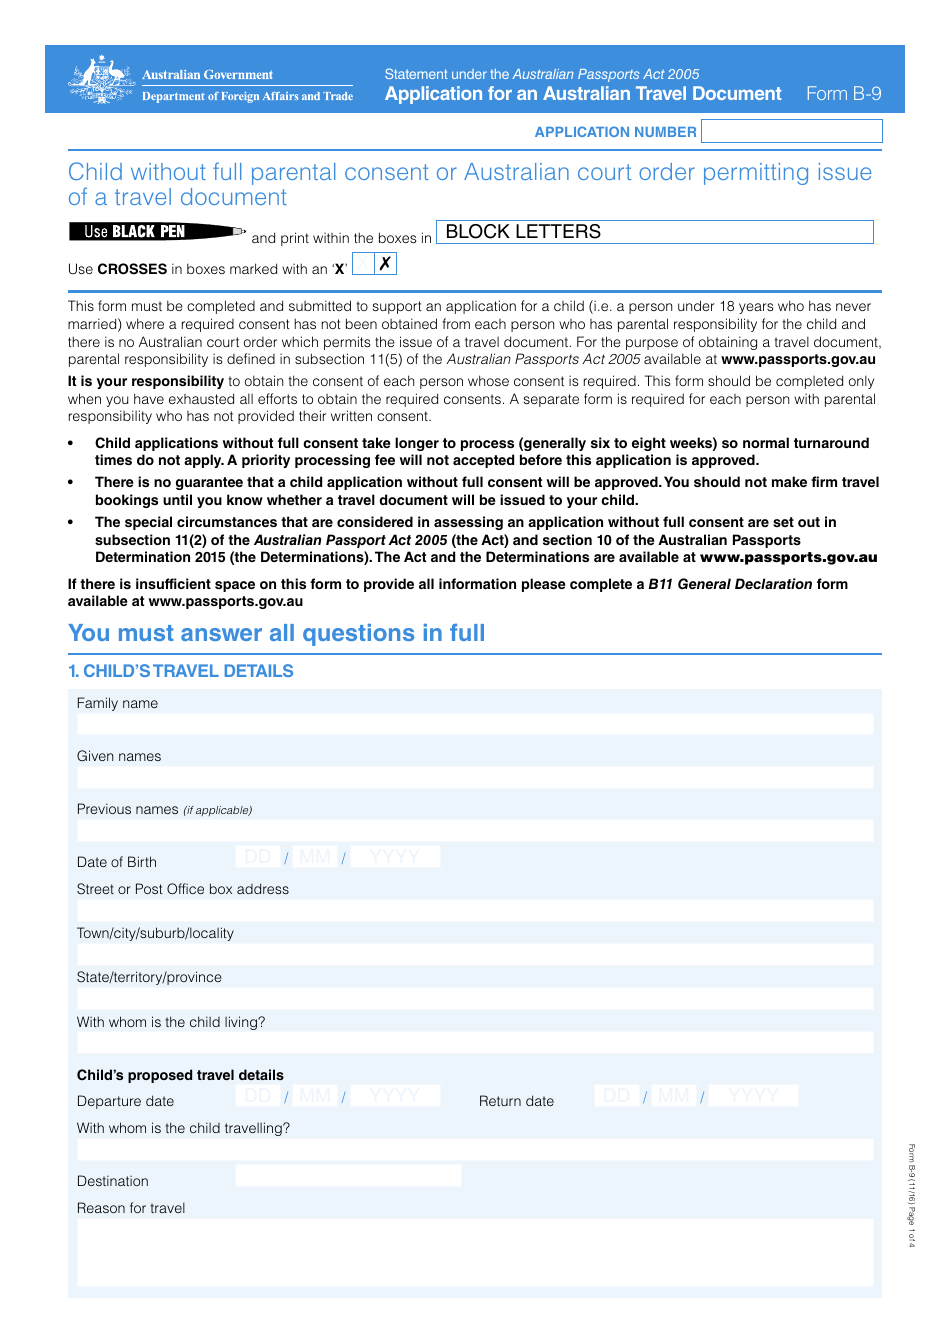 Form B-9 Application for an Australian Travel Document - Australia, Page 1